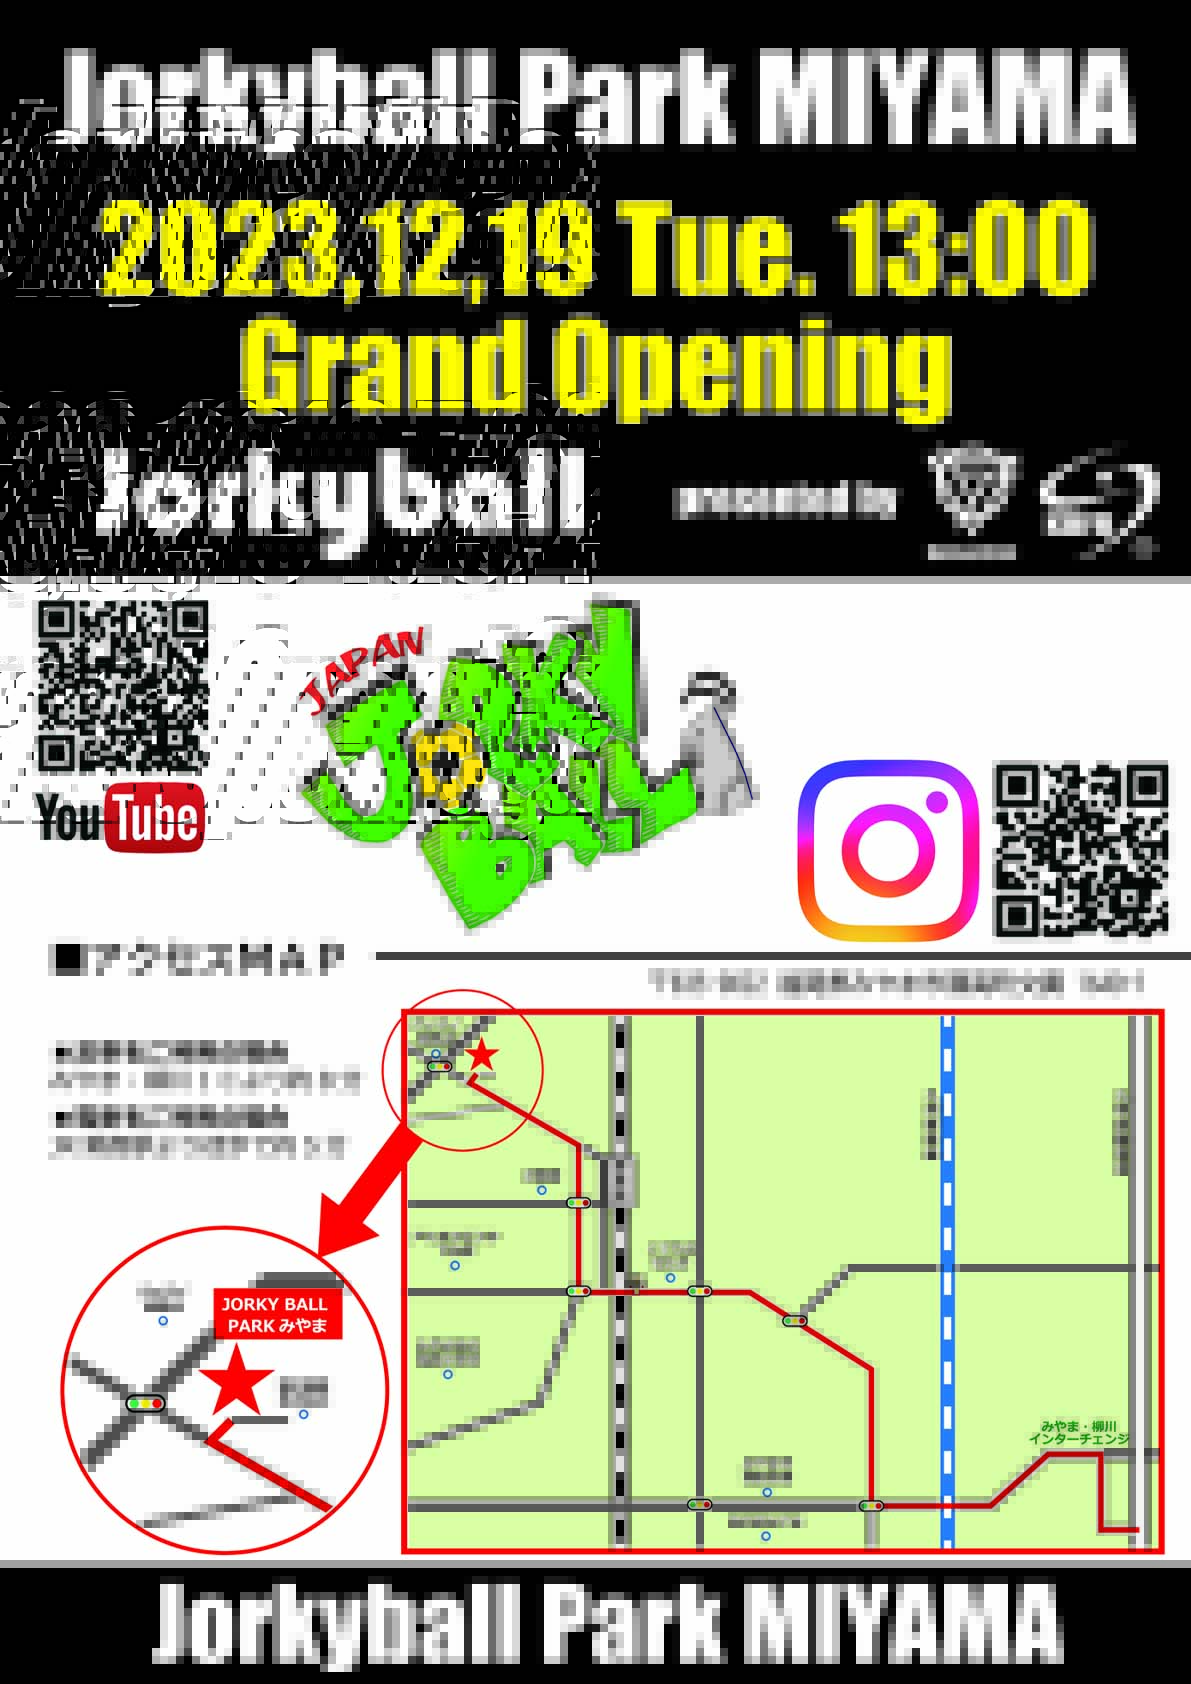 「Jorkyball Park MIYAMA」が2023年12月19日にOPENします！